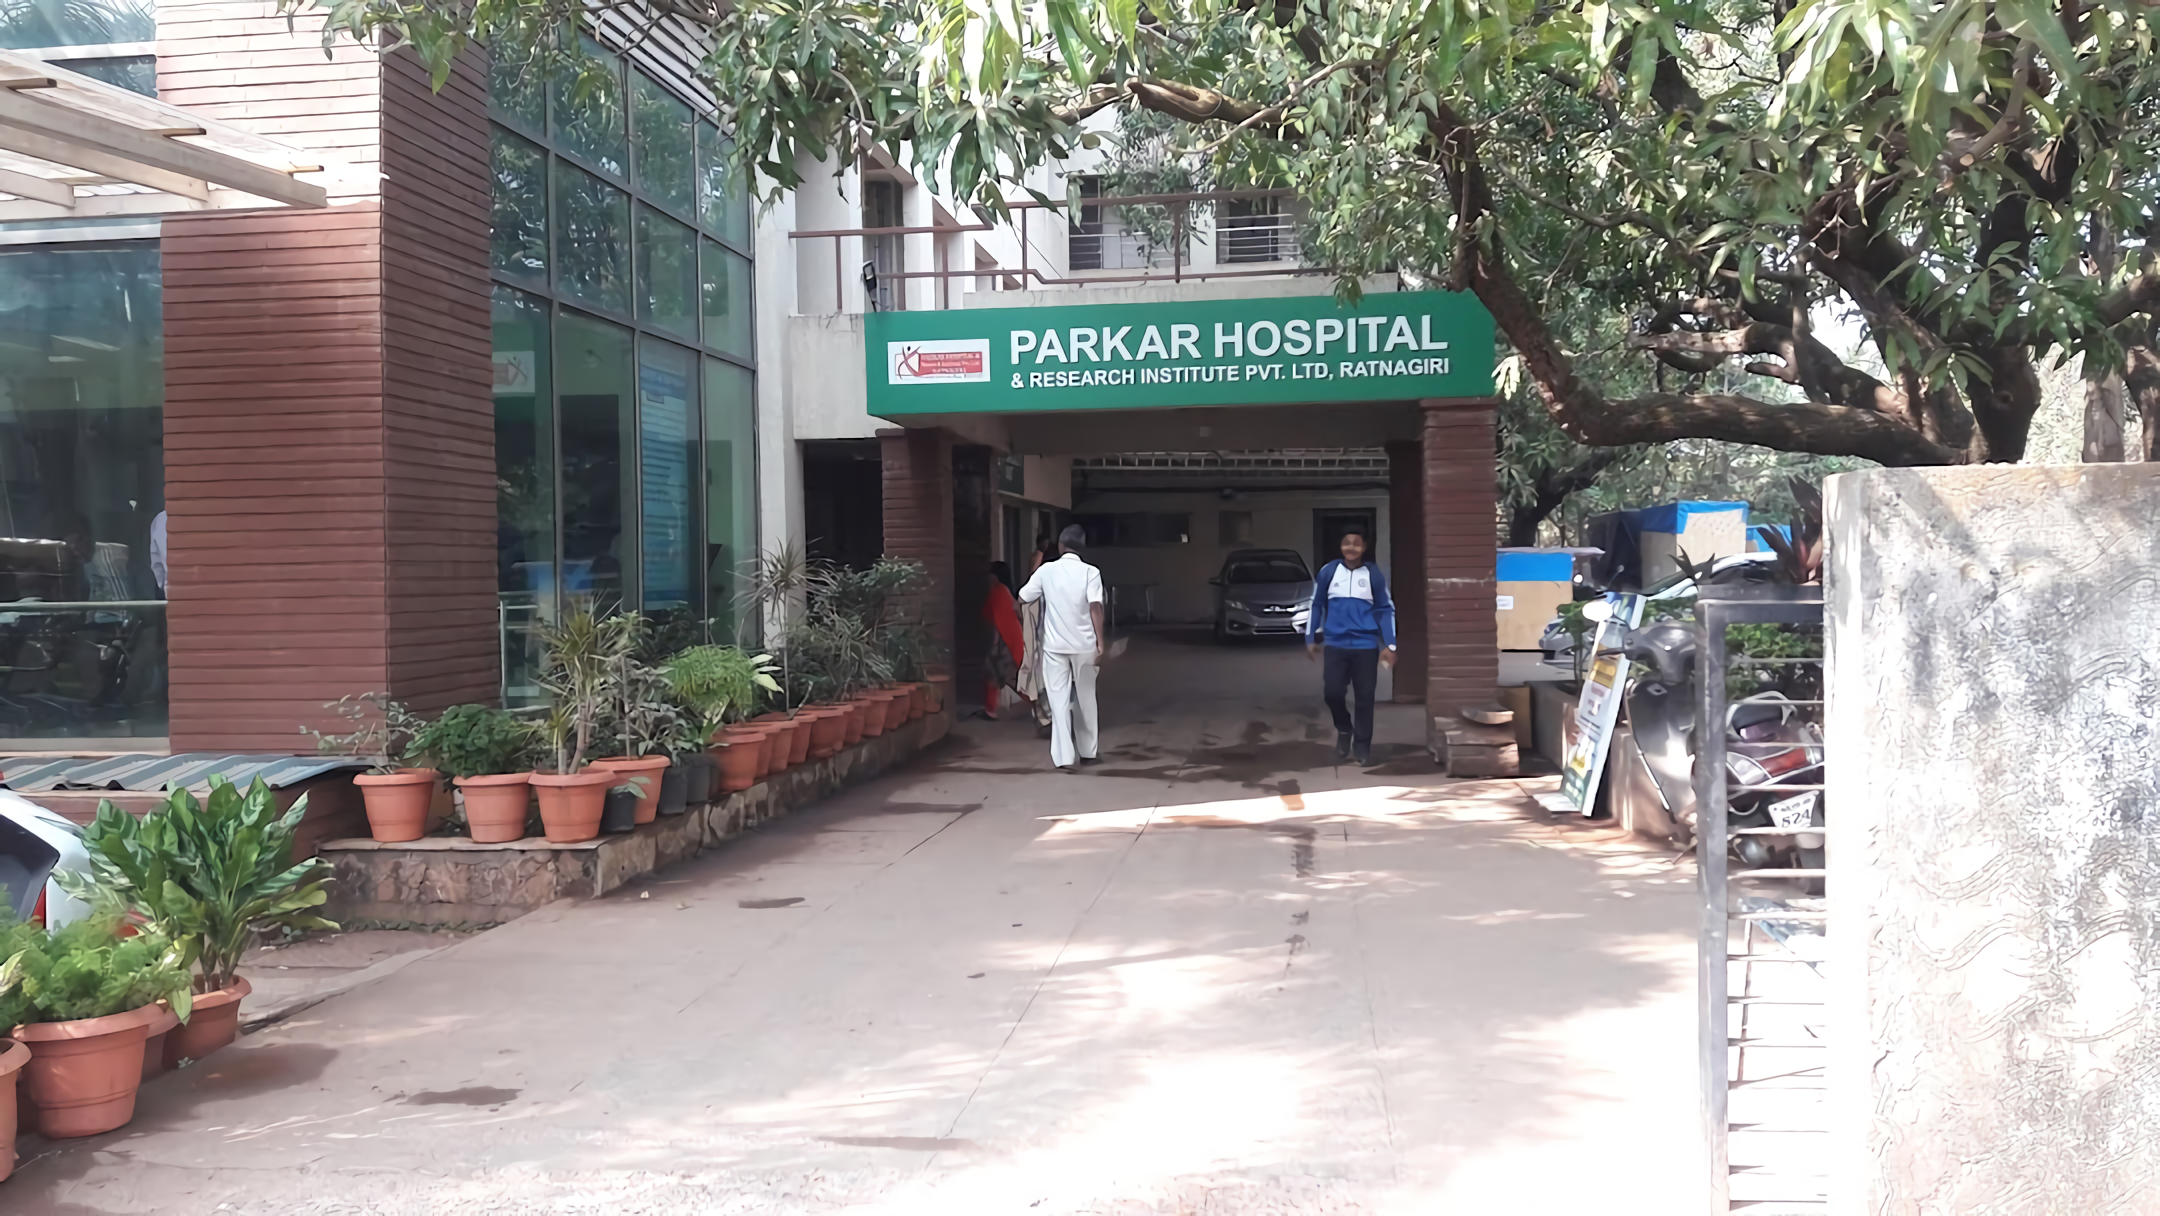 Parkar Hospital And Research Institute Ltd